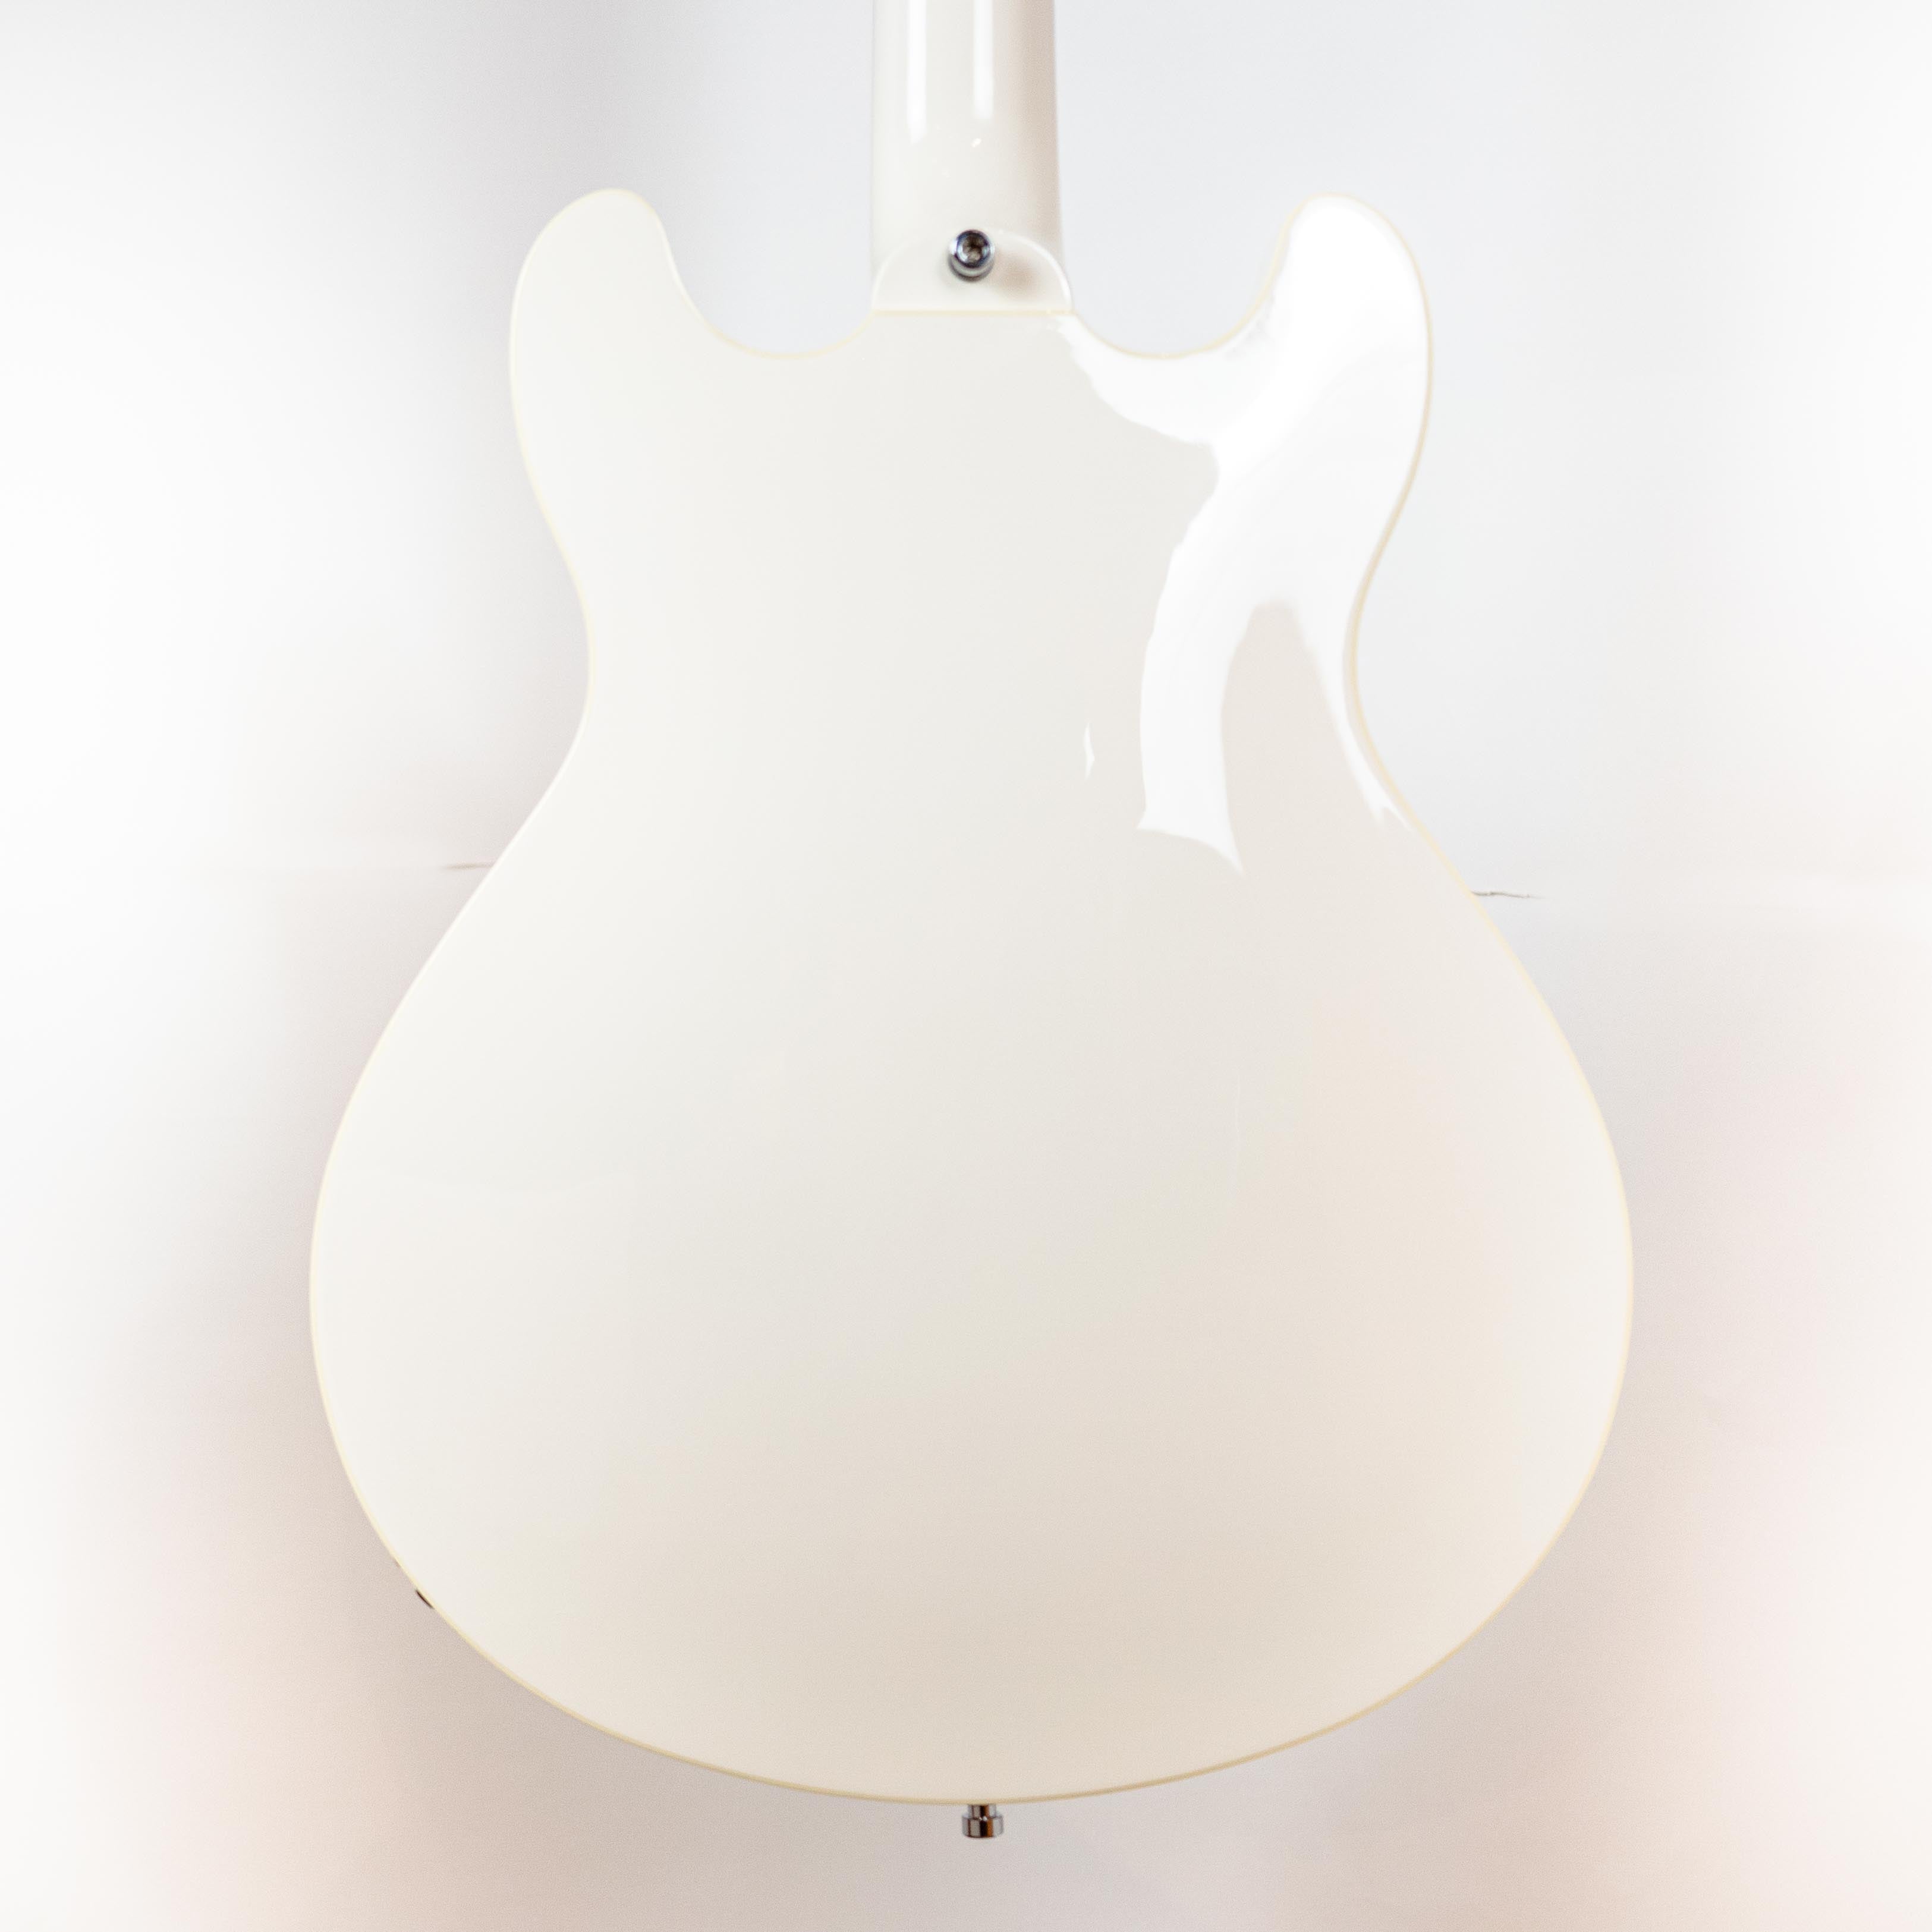 Warwick Pro Series Star Bass-4 String-Solid Creme White High Polish